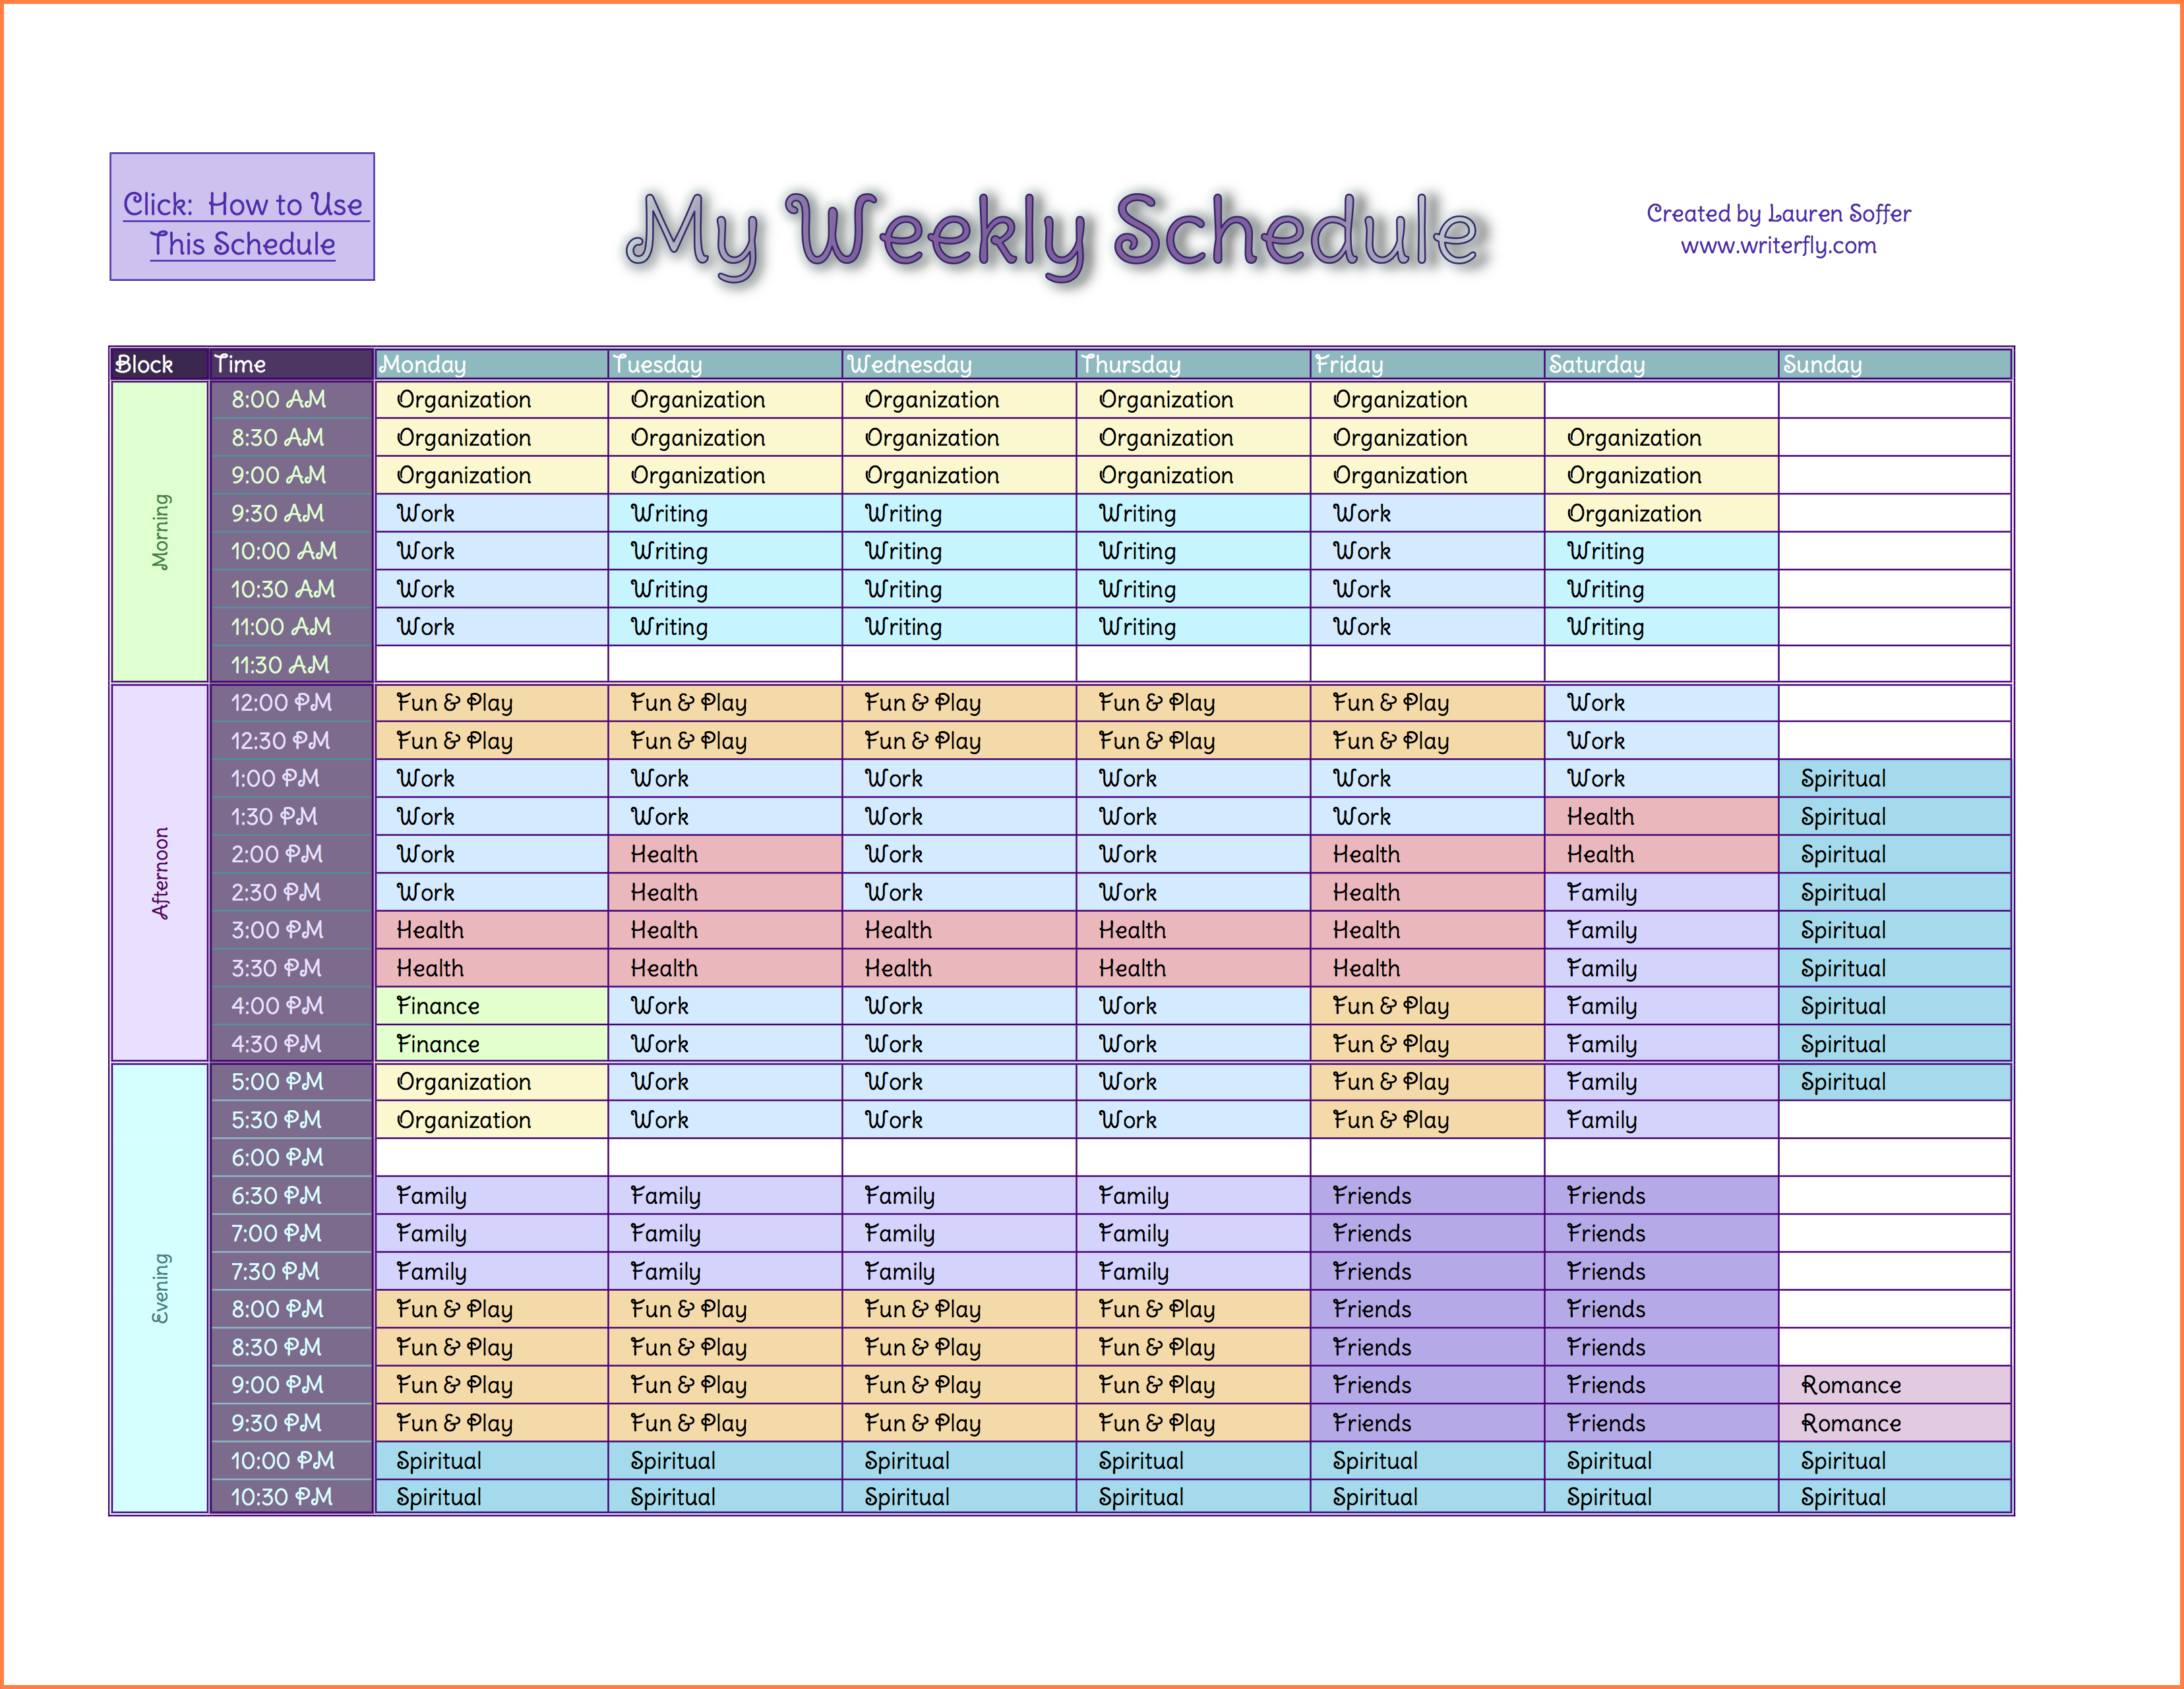 weekly work schedule template excel